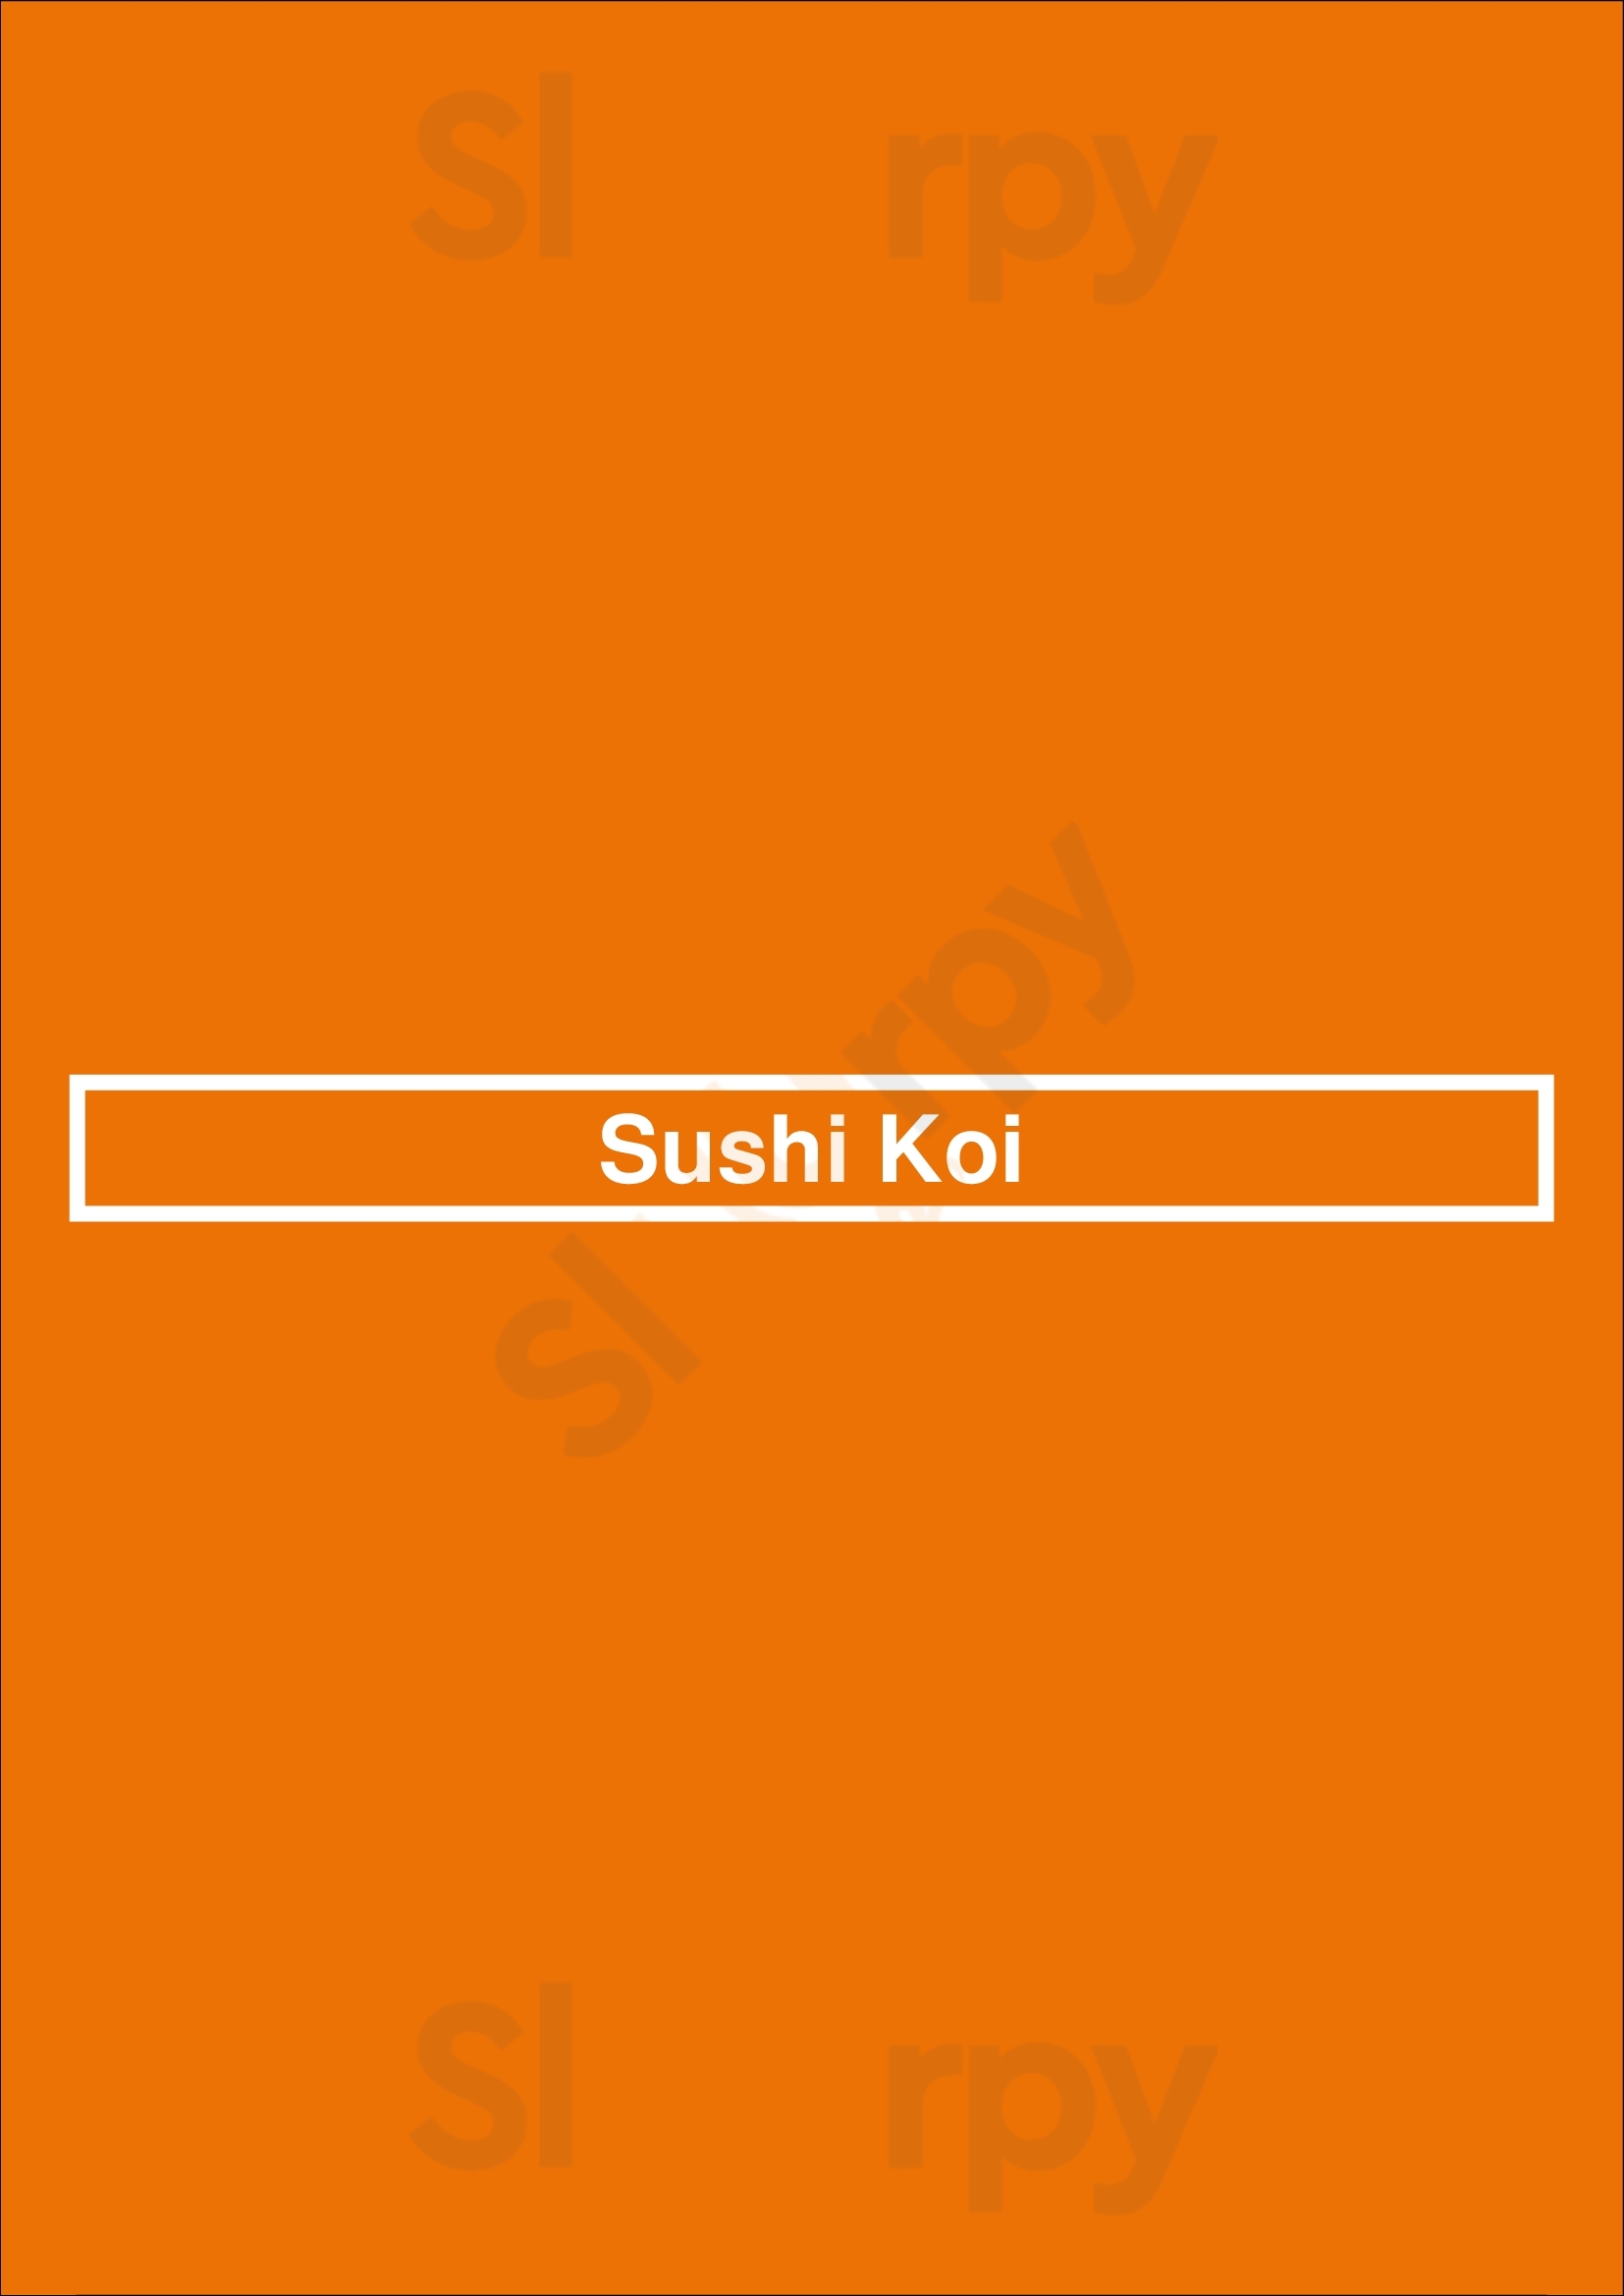 Sushi Koi Tilburg Menu - 1